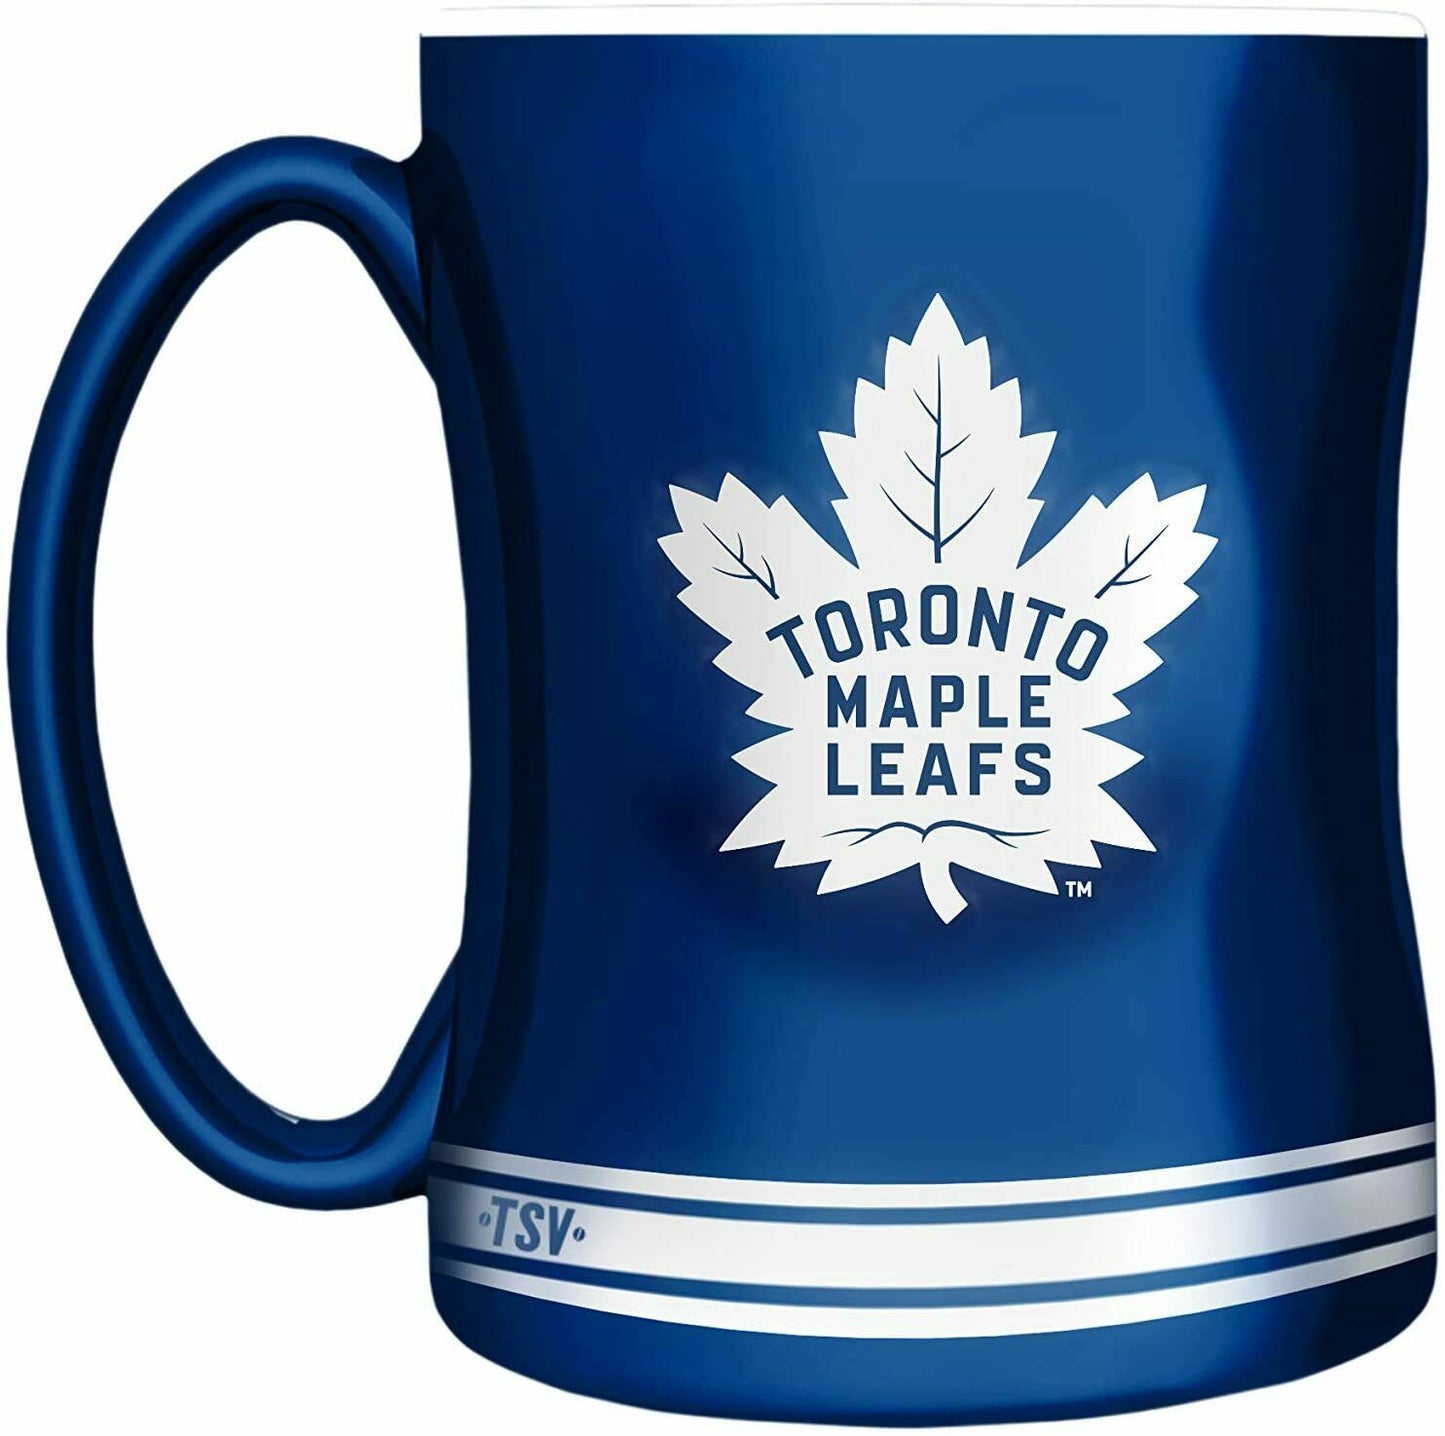 NHL Coffee Mug Sculpted Relief Maple Leafs